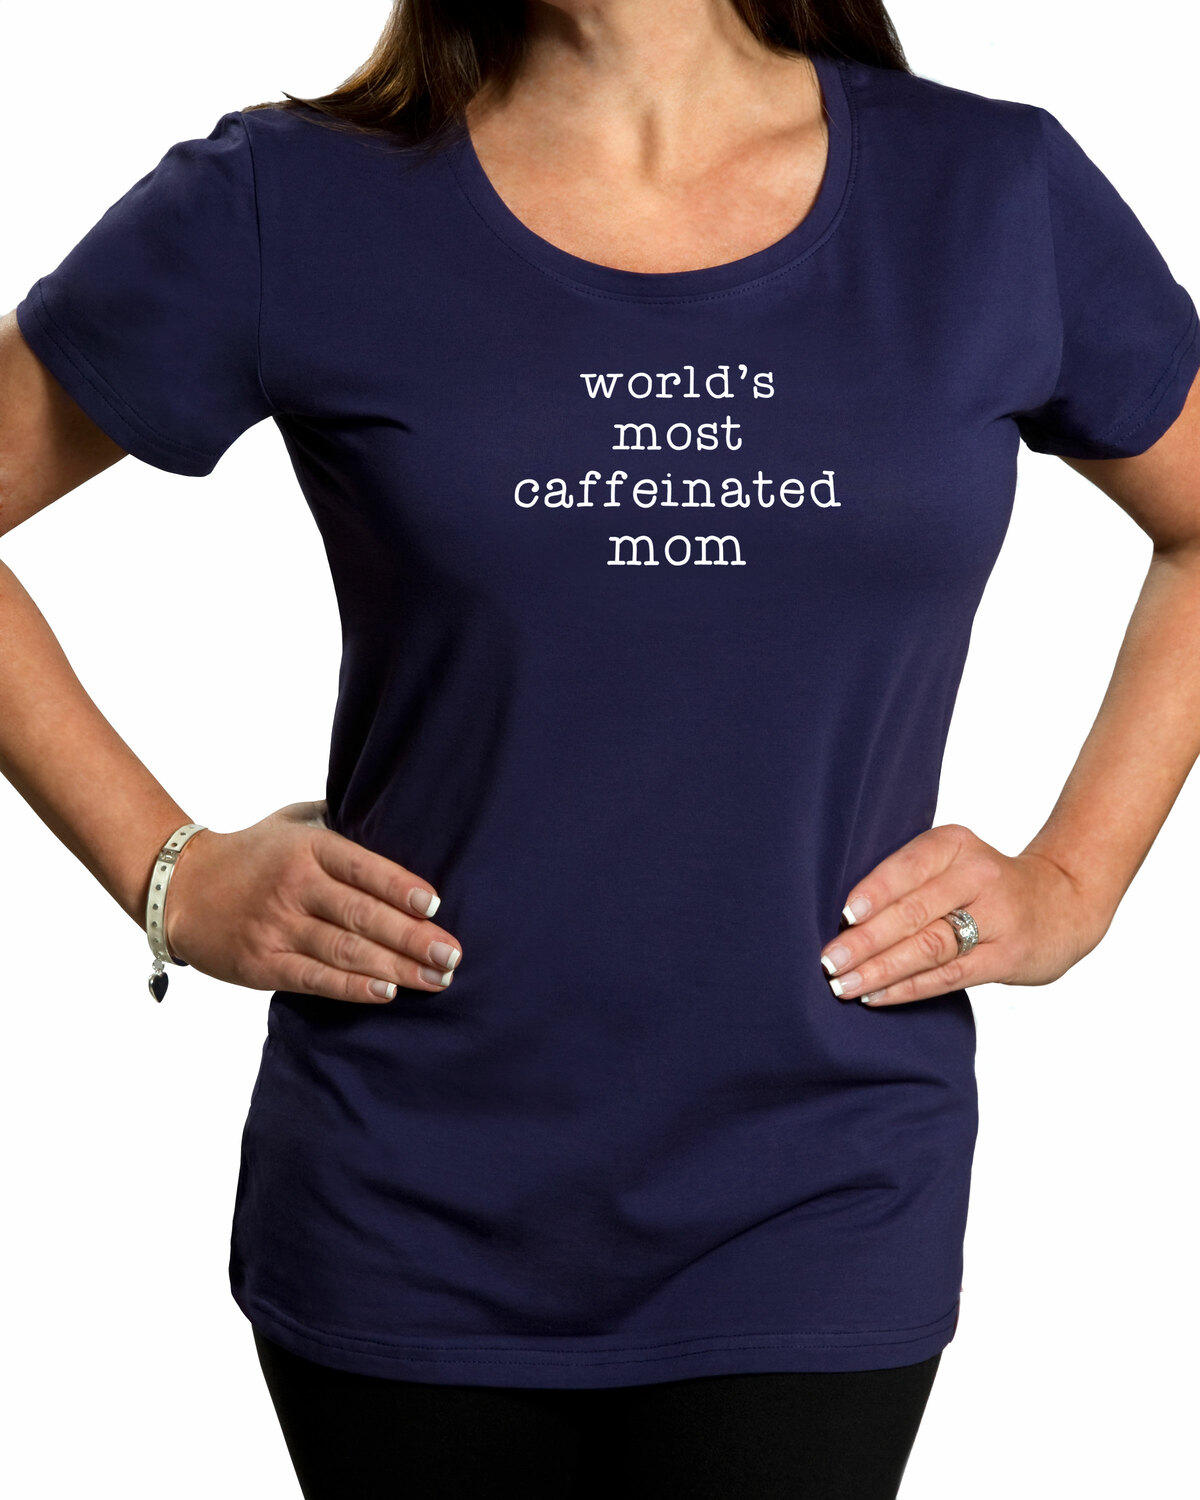 Caffeinated Mom by Mom Love - Caffeinated Mom - Small Navy Blue T-Shirt
